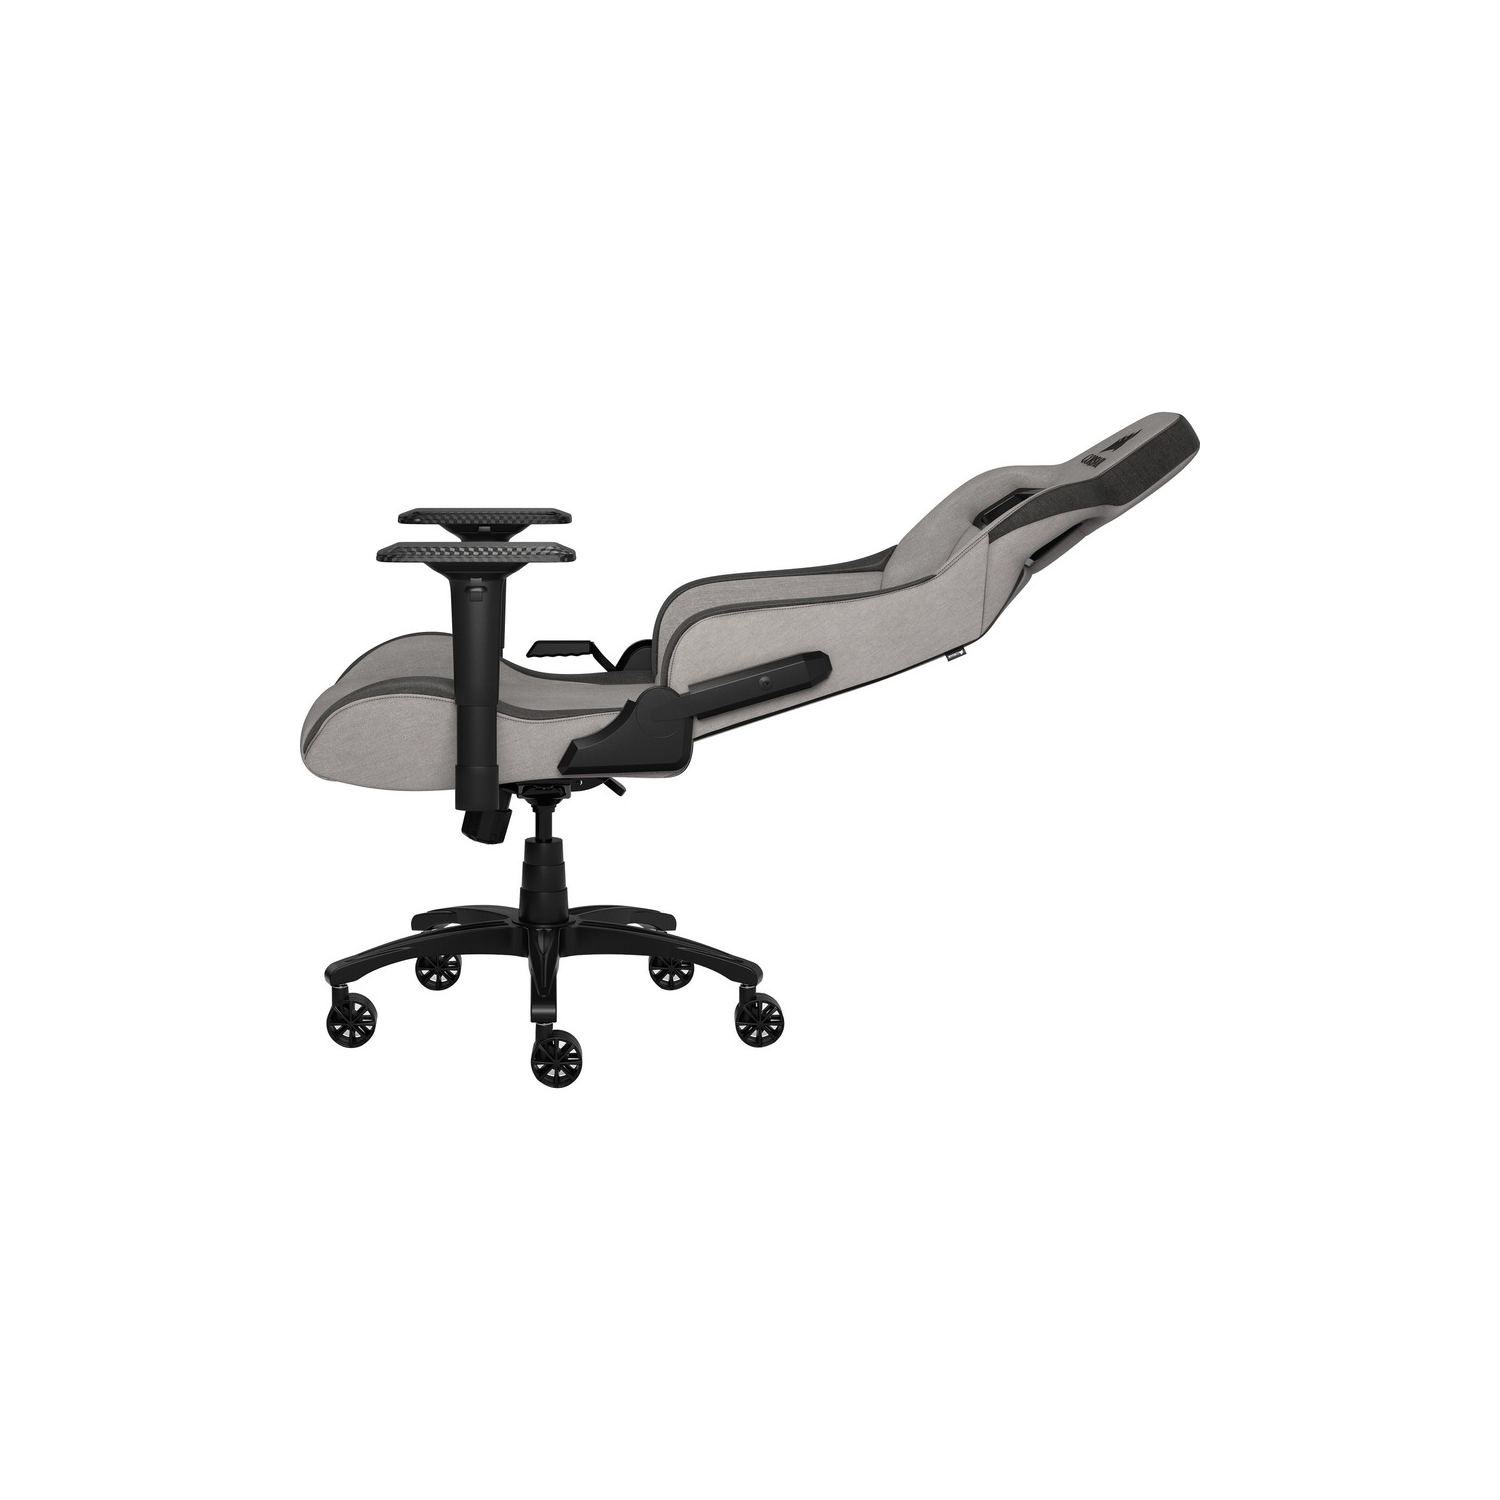 Corsair T3 RUSH Gaming Chair - Gray/Charcoal - (CF-9010031-WW